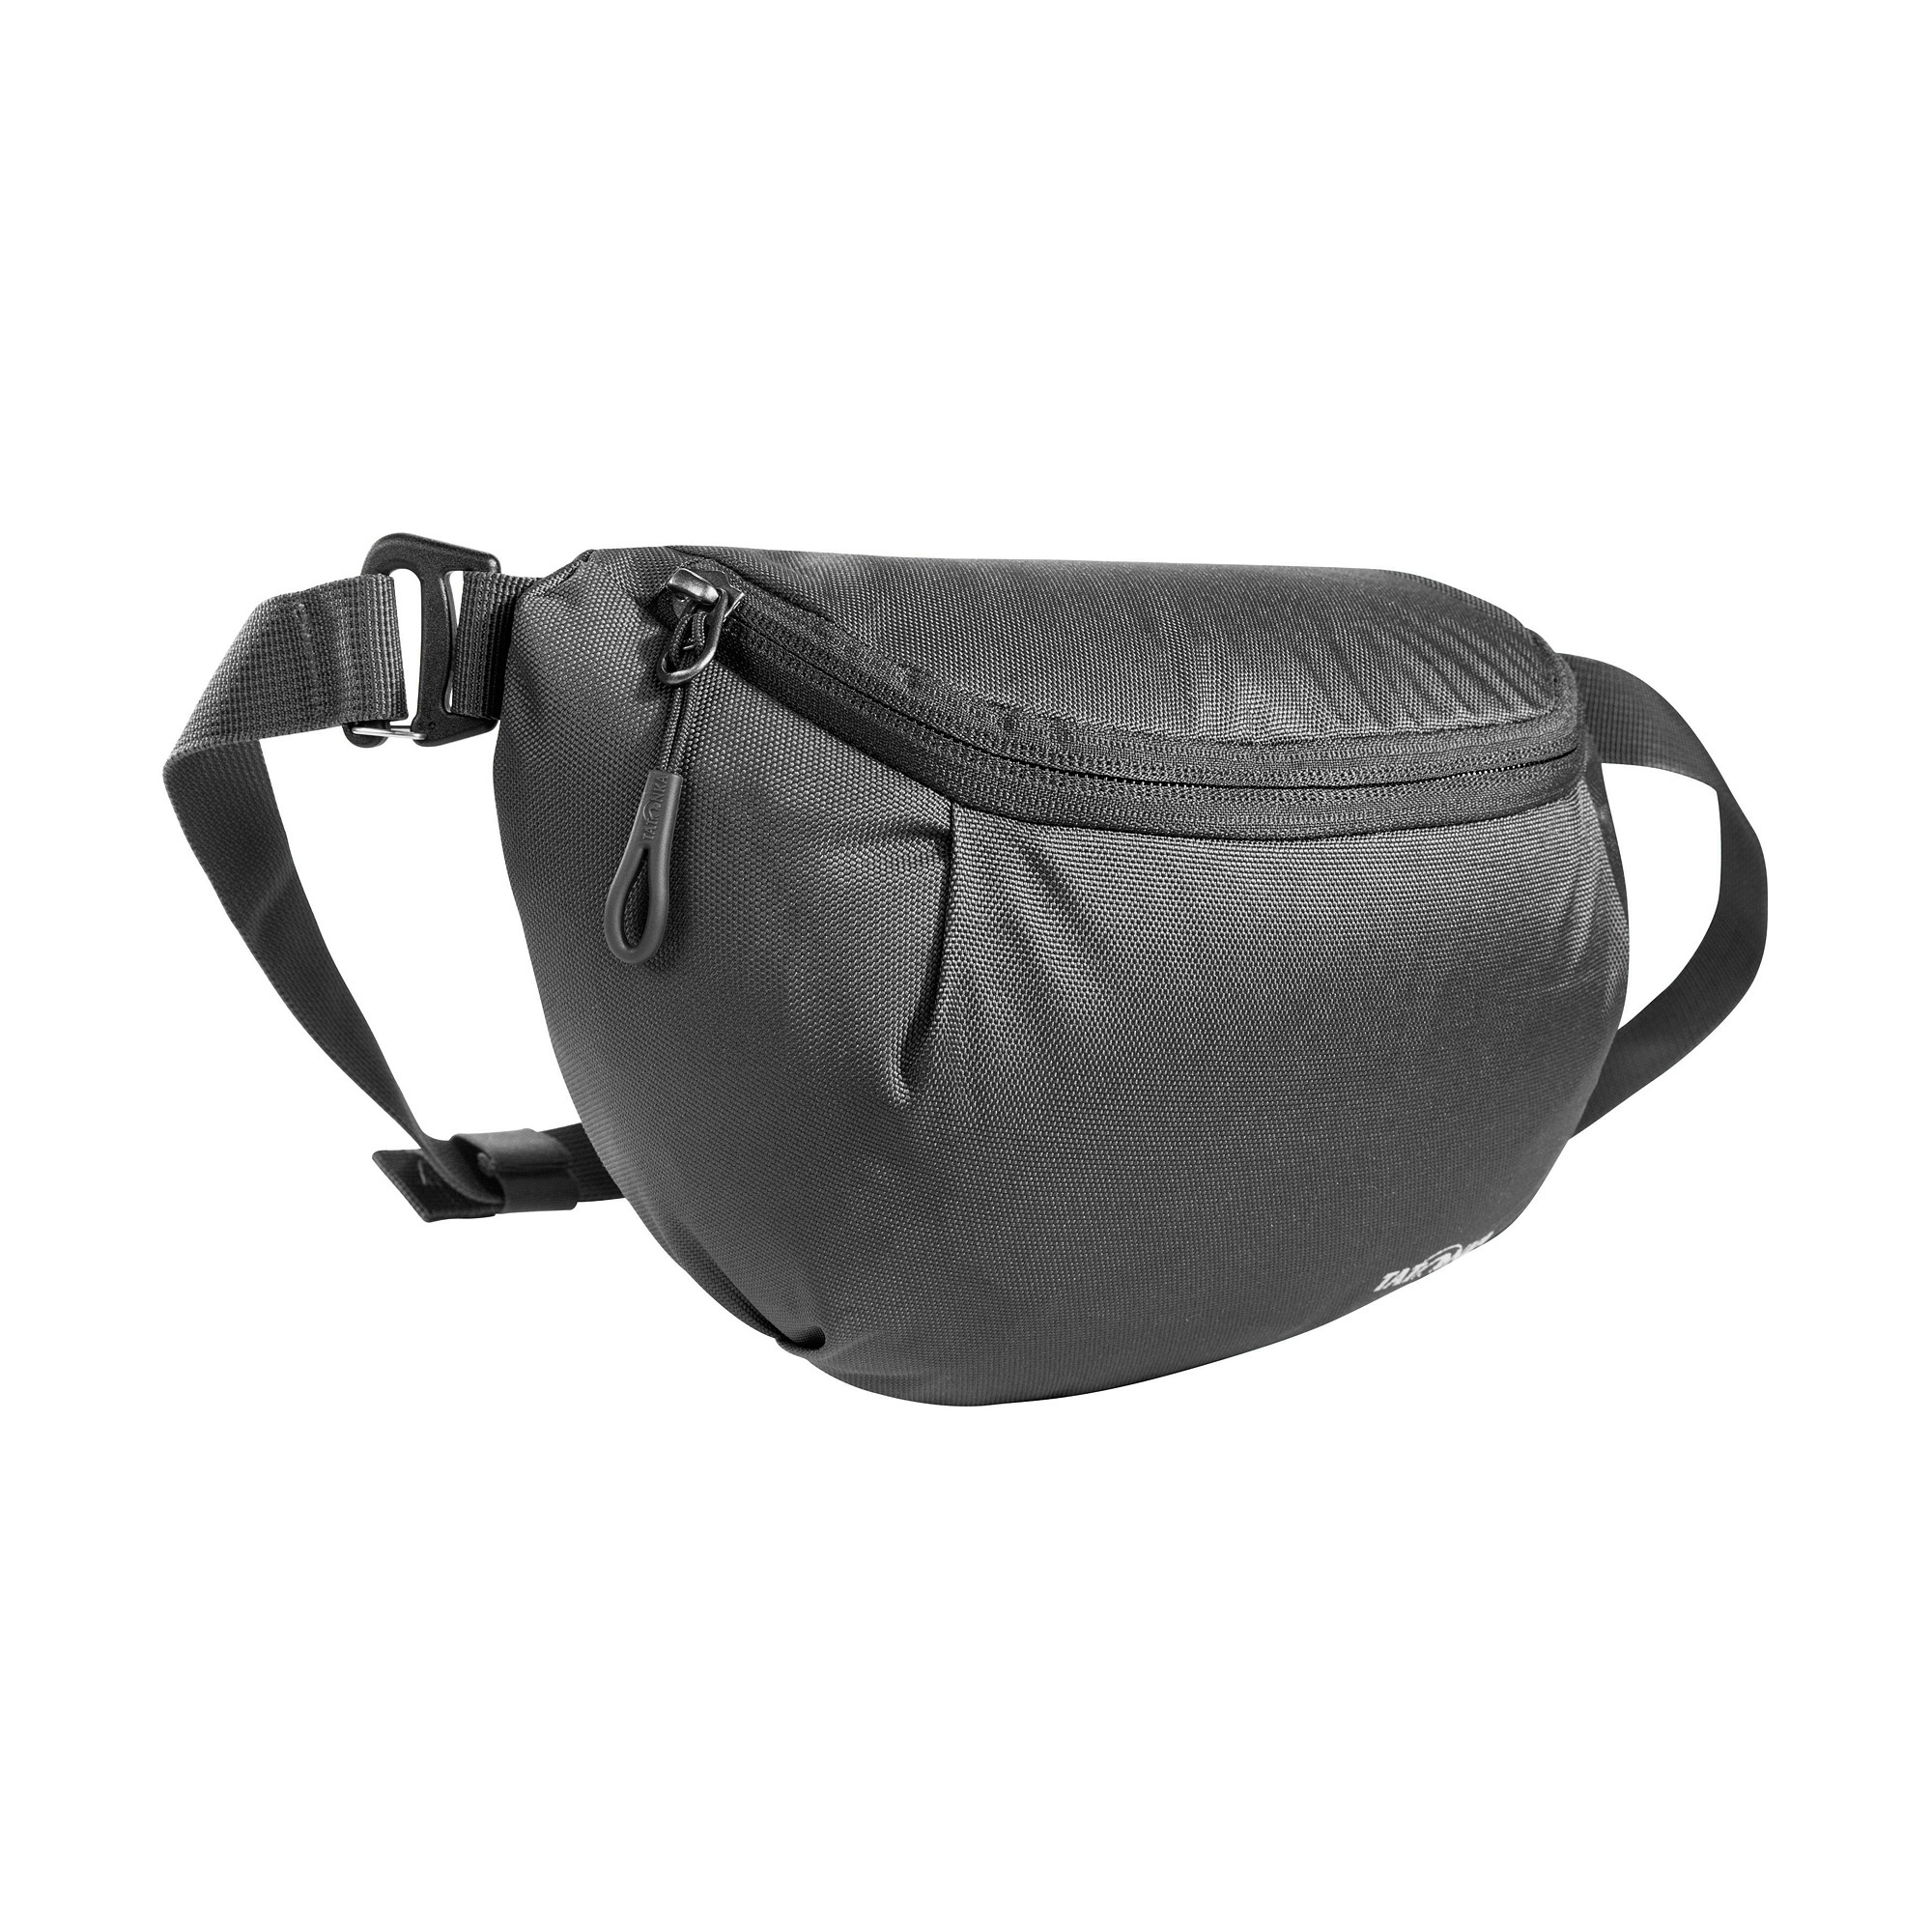 Backpack Accessories - Hip Belt Pouch - Tatonka | Backpacks, Tents ...